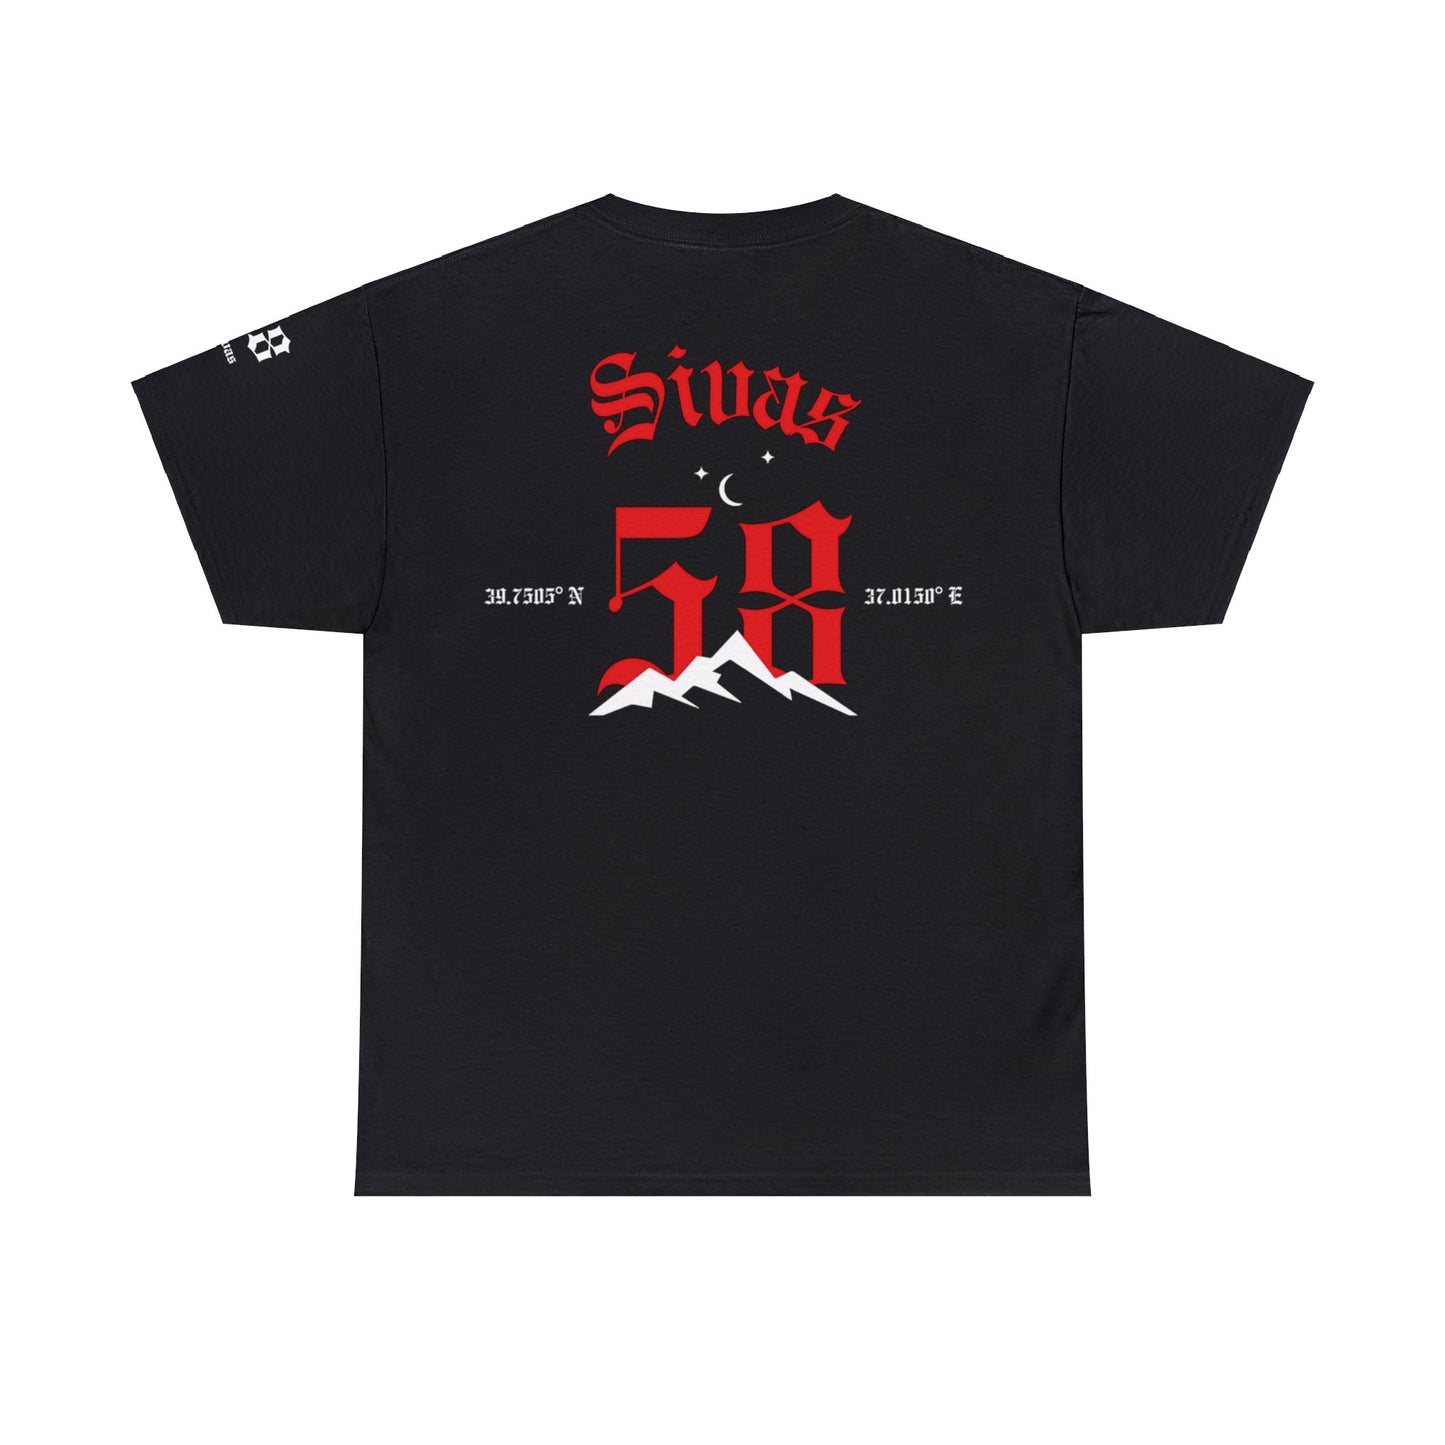 Şehirim - 58 Sivas - T-Shirt - Back Print - Black